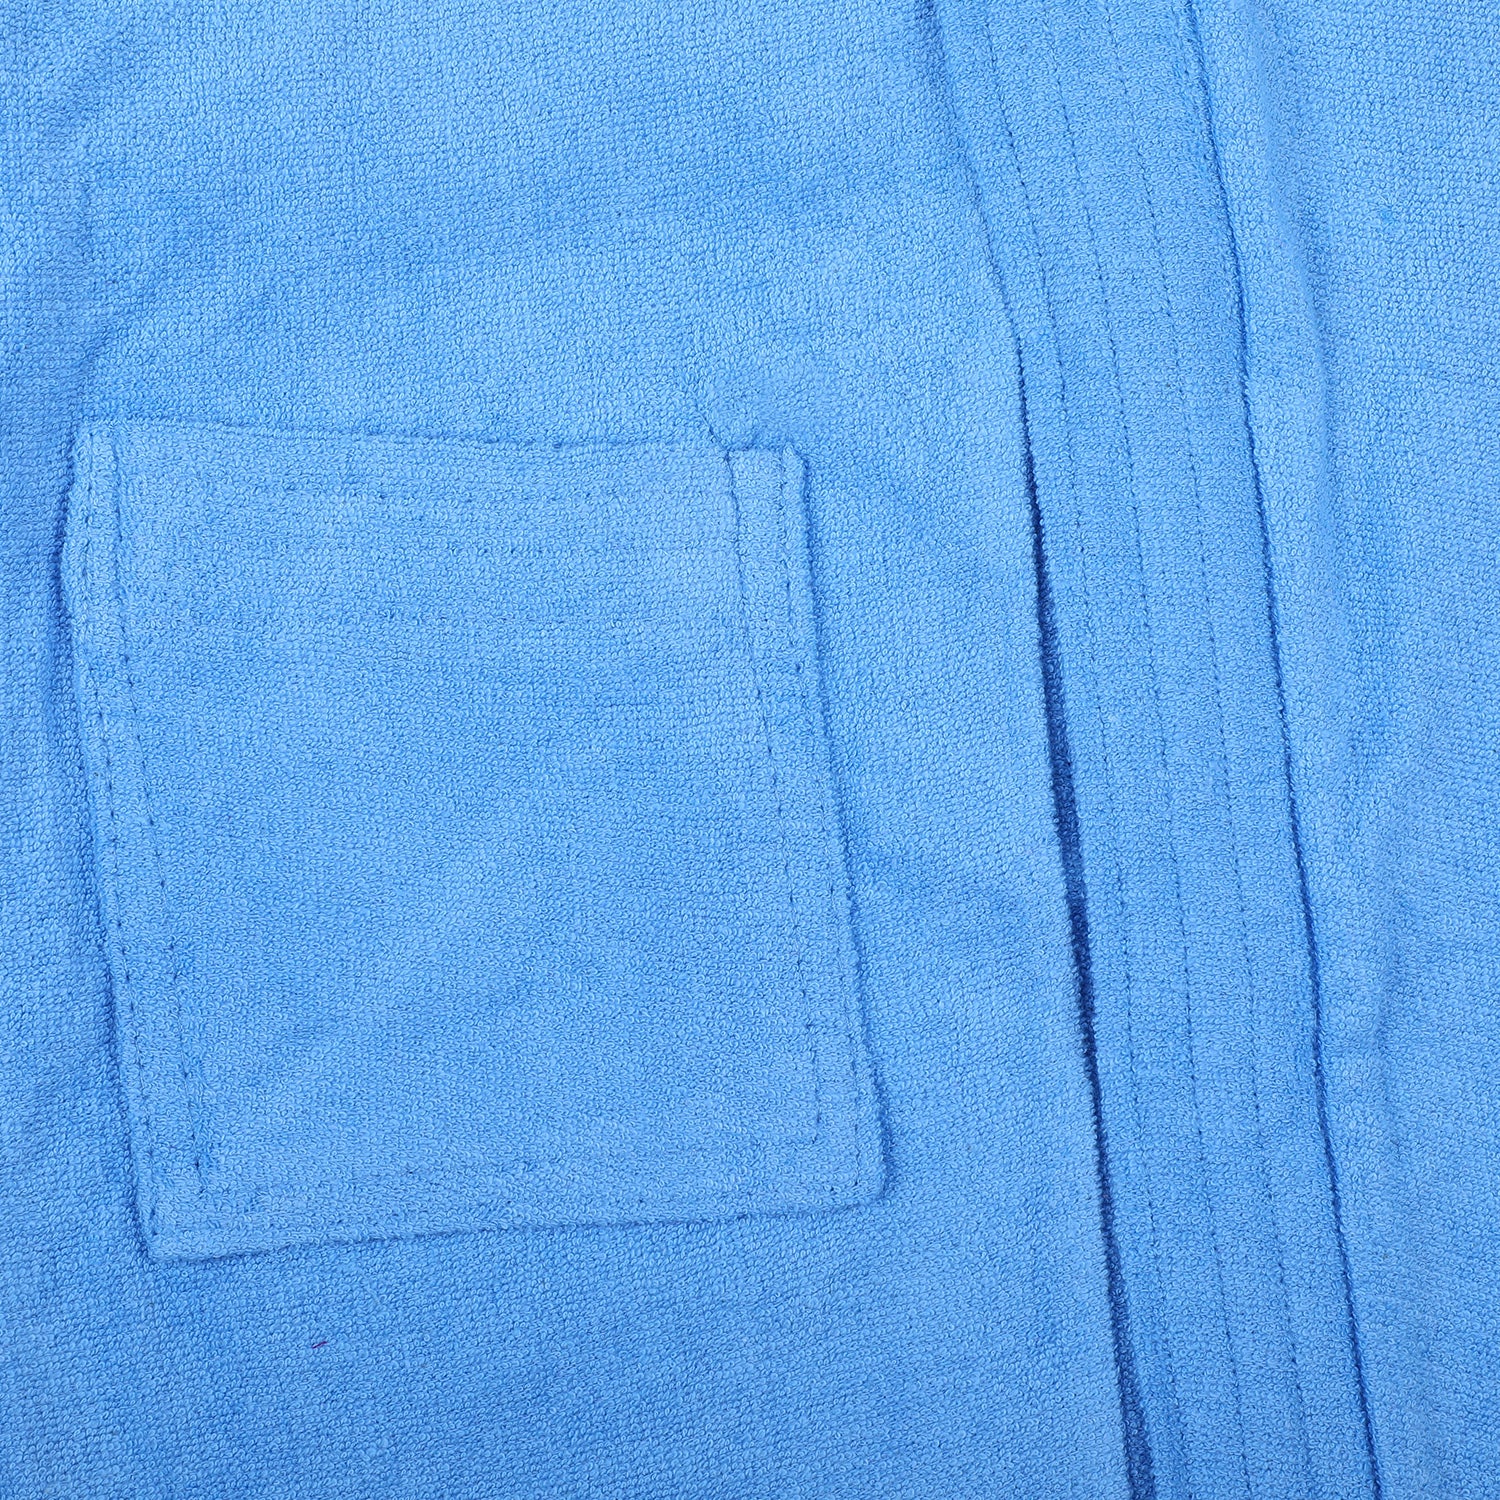 Solid Toddler Half Sleeves Pocket with Waist Belt Bathrobe - Blue - Baby Moo